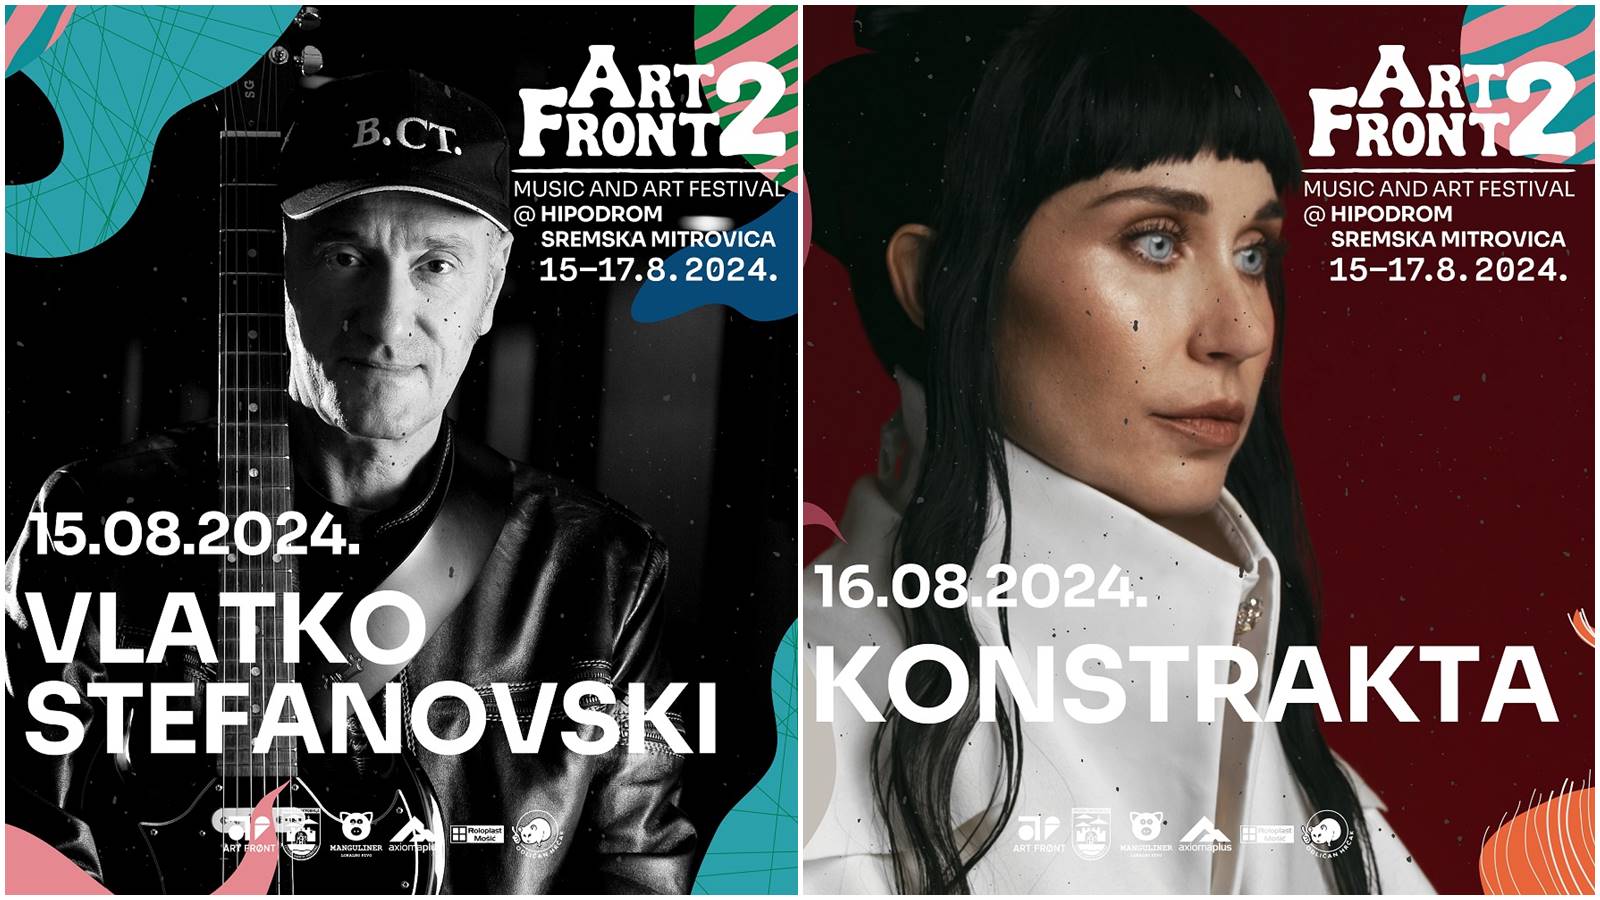 Roni Size, Konstrakta, Zoster, Buč Kesidi, Letu Štuke i mnogi drugi na Art Front 2 festivalu u Sremskoj Mitrovici